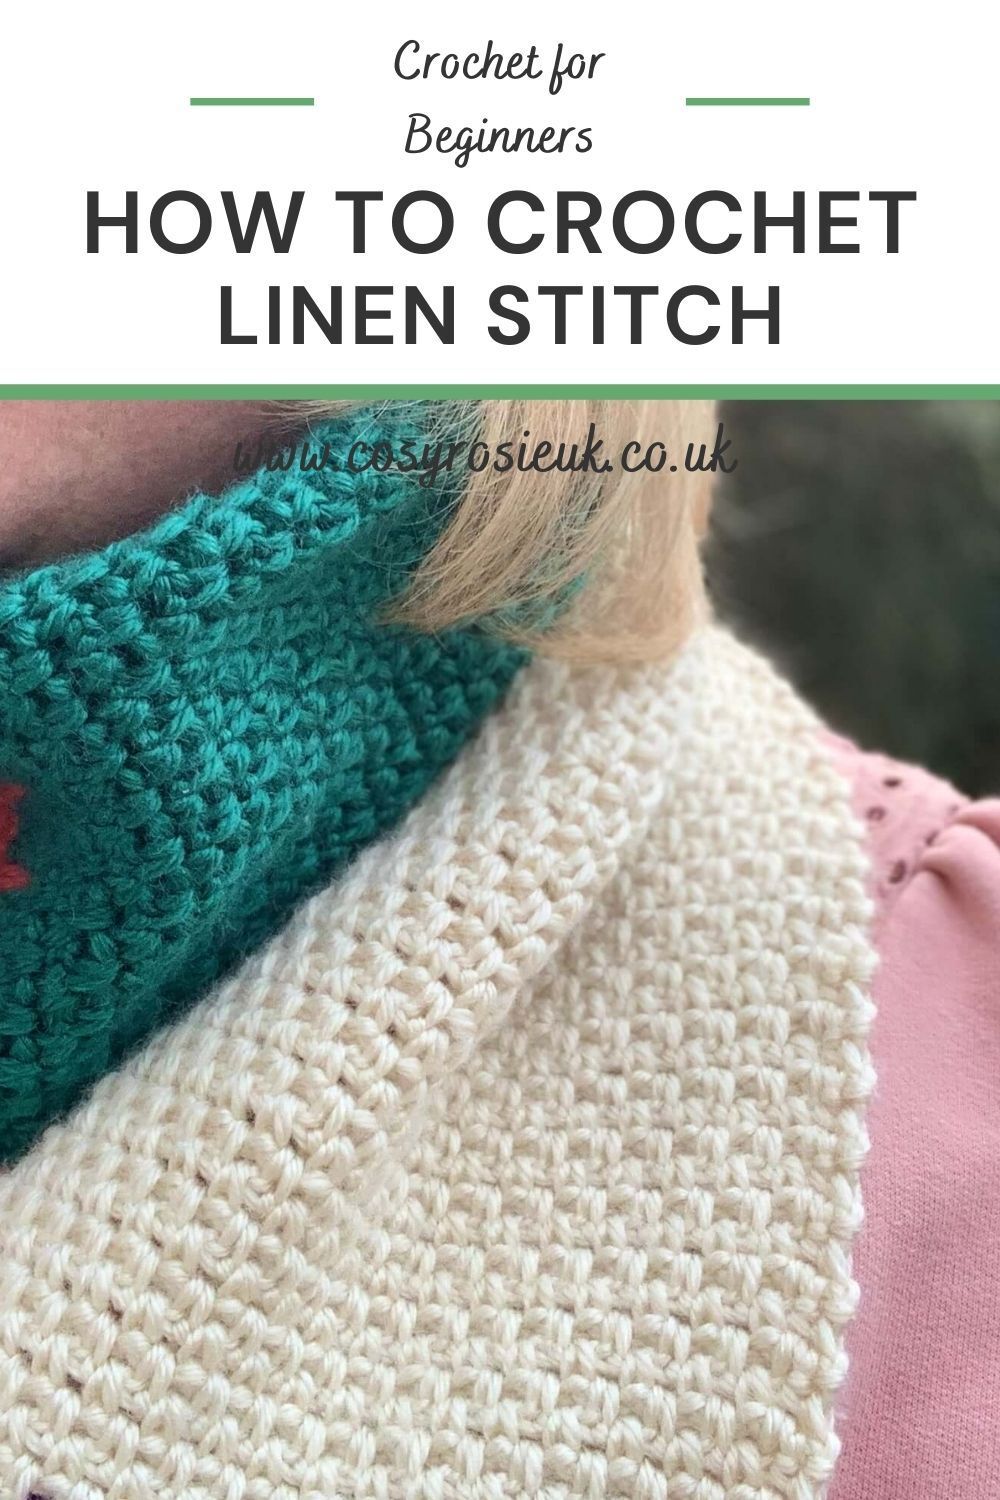 How to crochet linen stitch